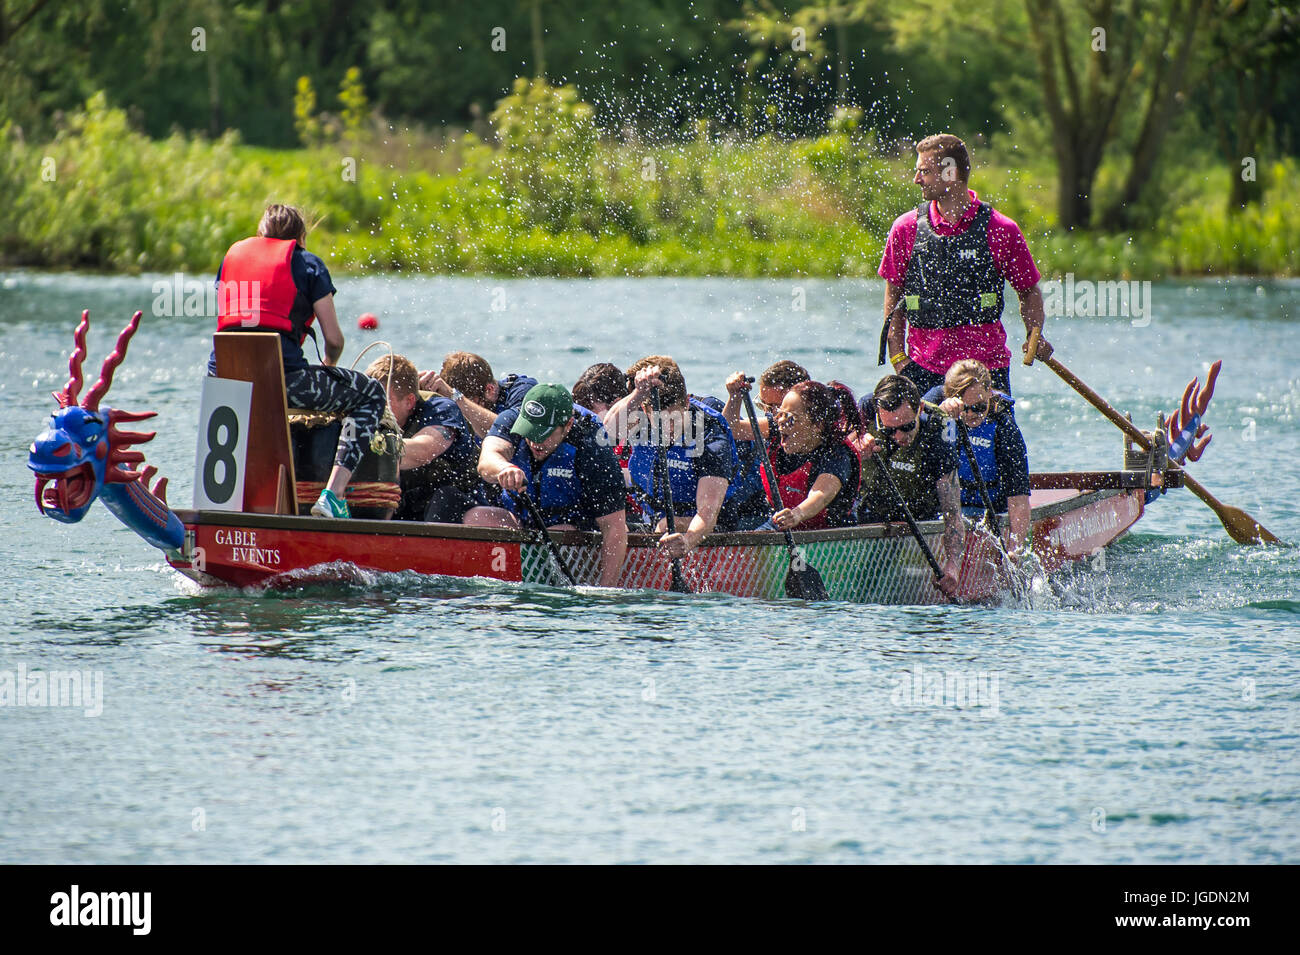 Dragon Boat racing sul lago a remi a Thorpe Meadows Peterborough Foto Stock